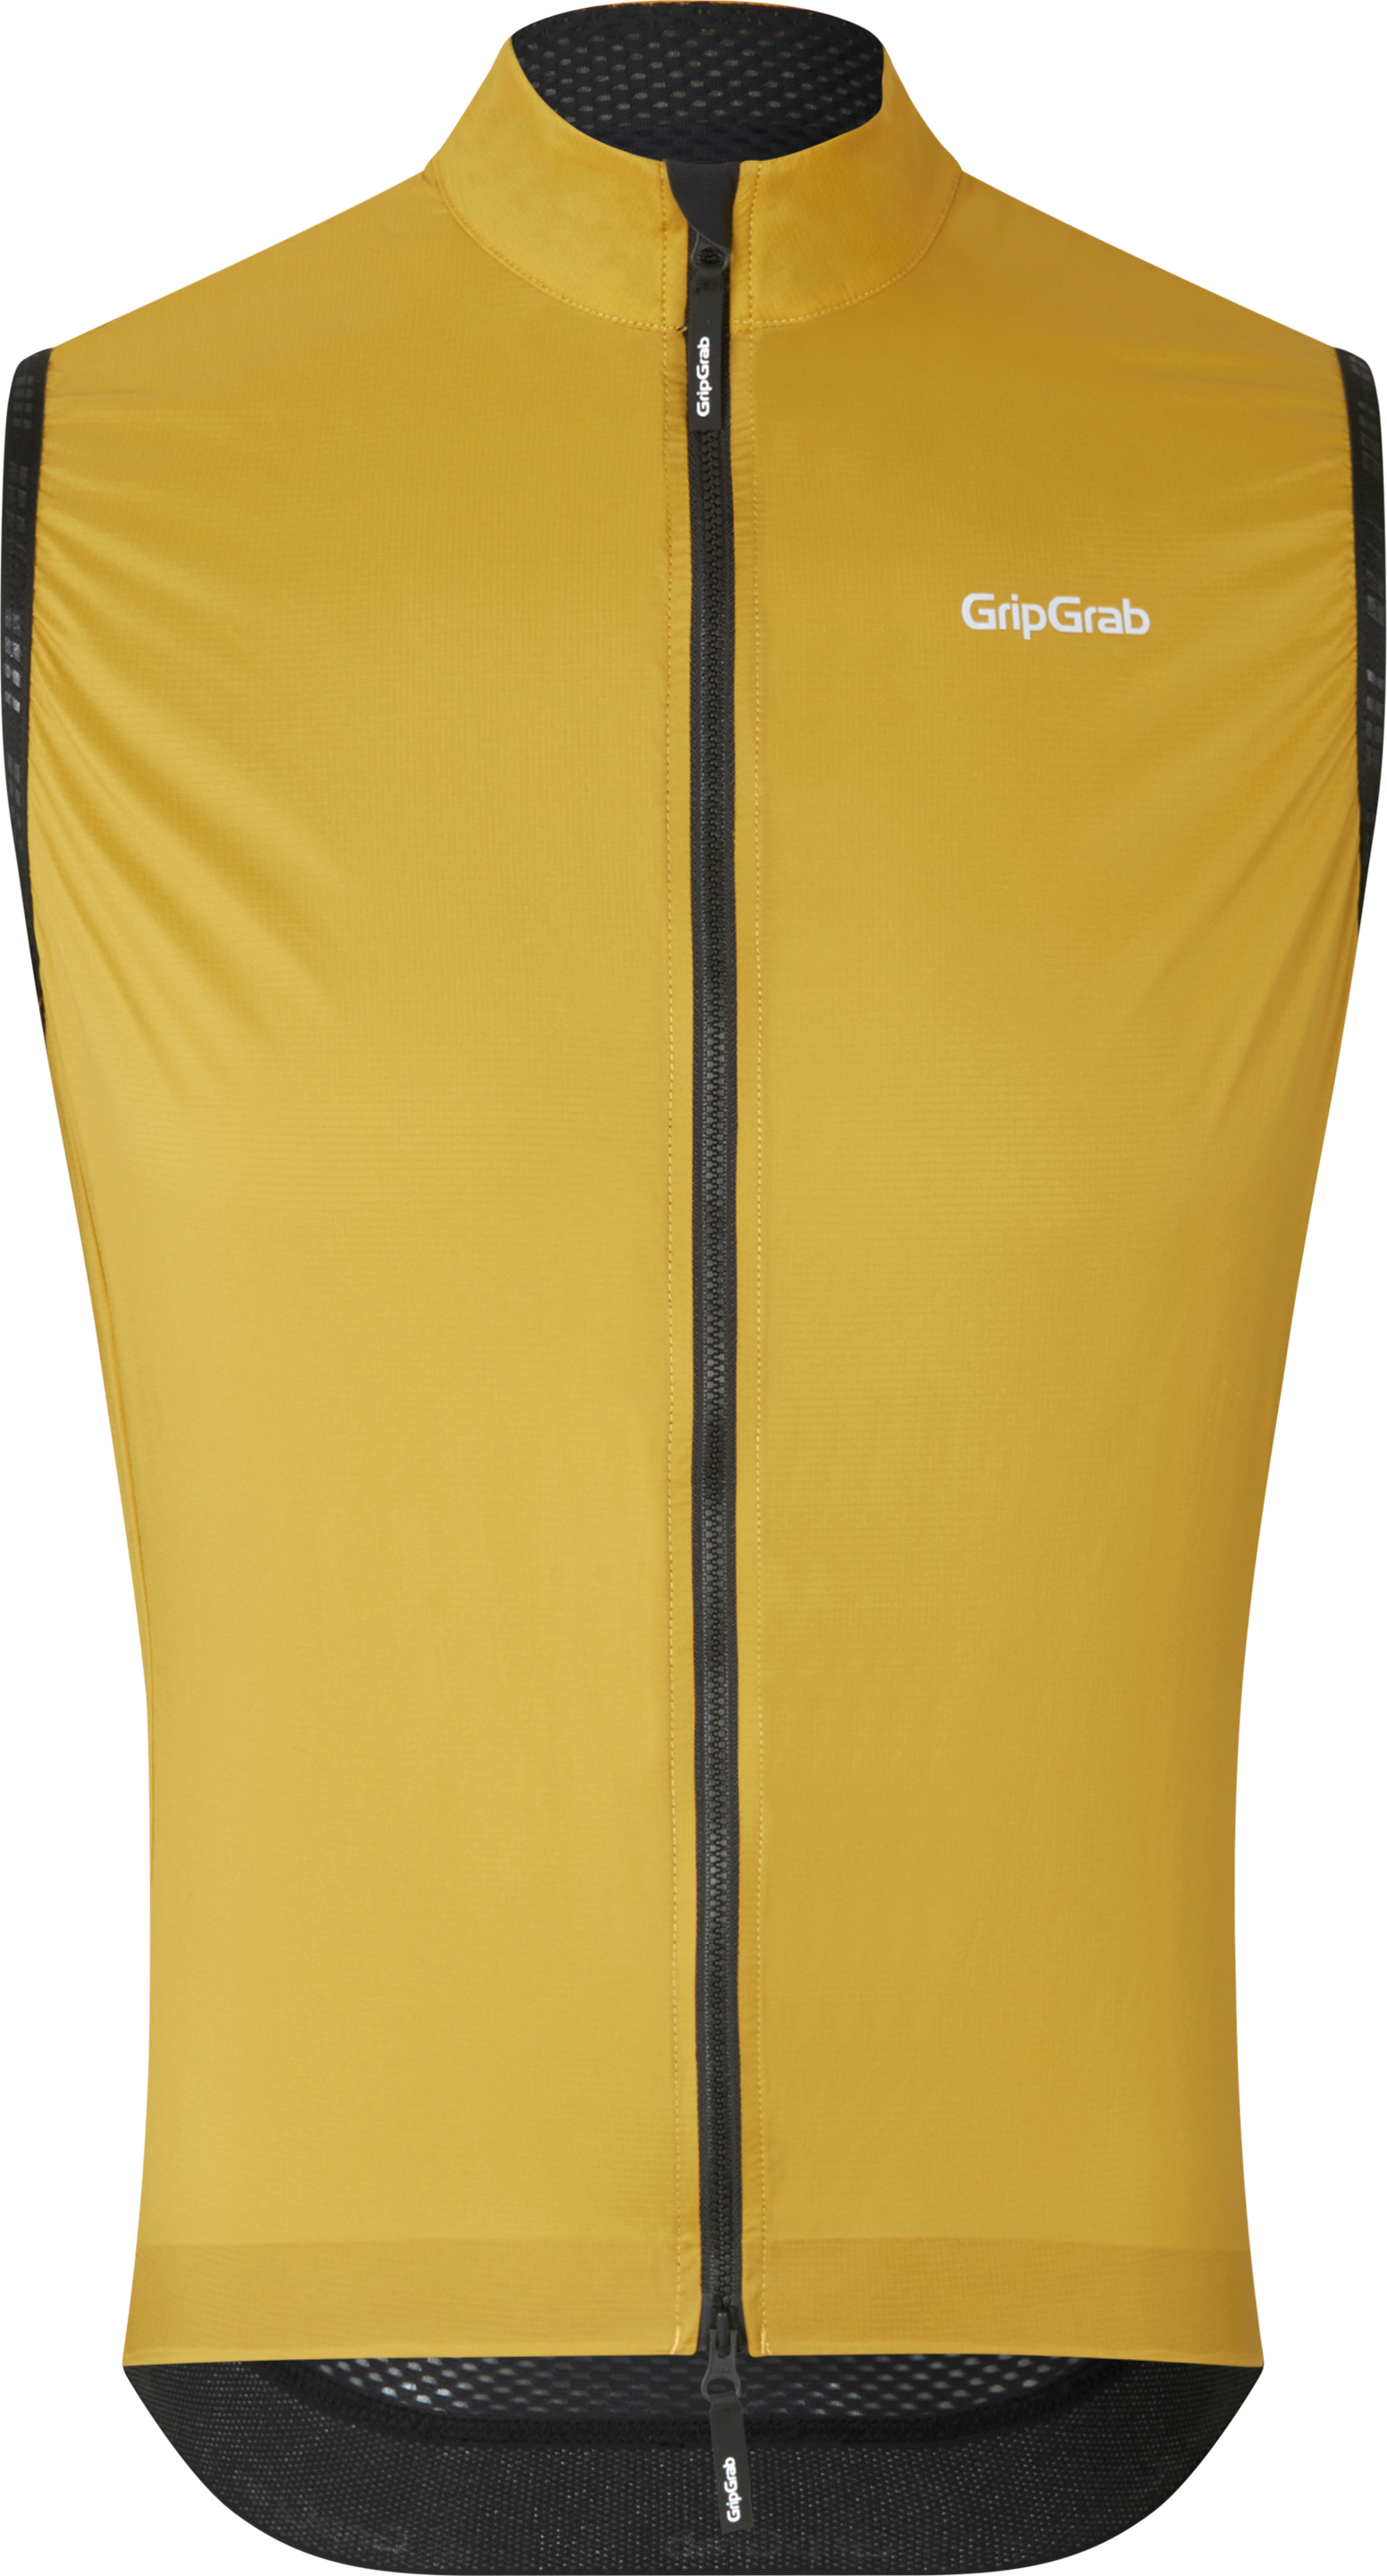 Gripgrab Men's WindBuster Windproof Lightweight Vest Mustard Yellow L, Mustard Yellow